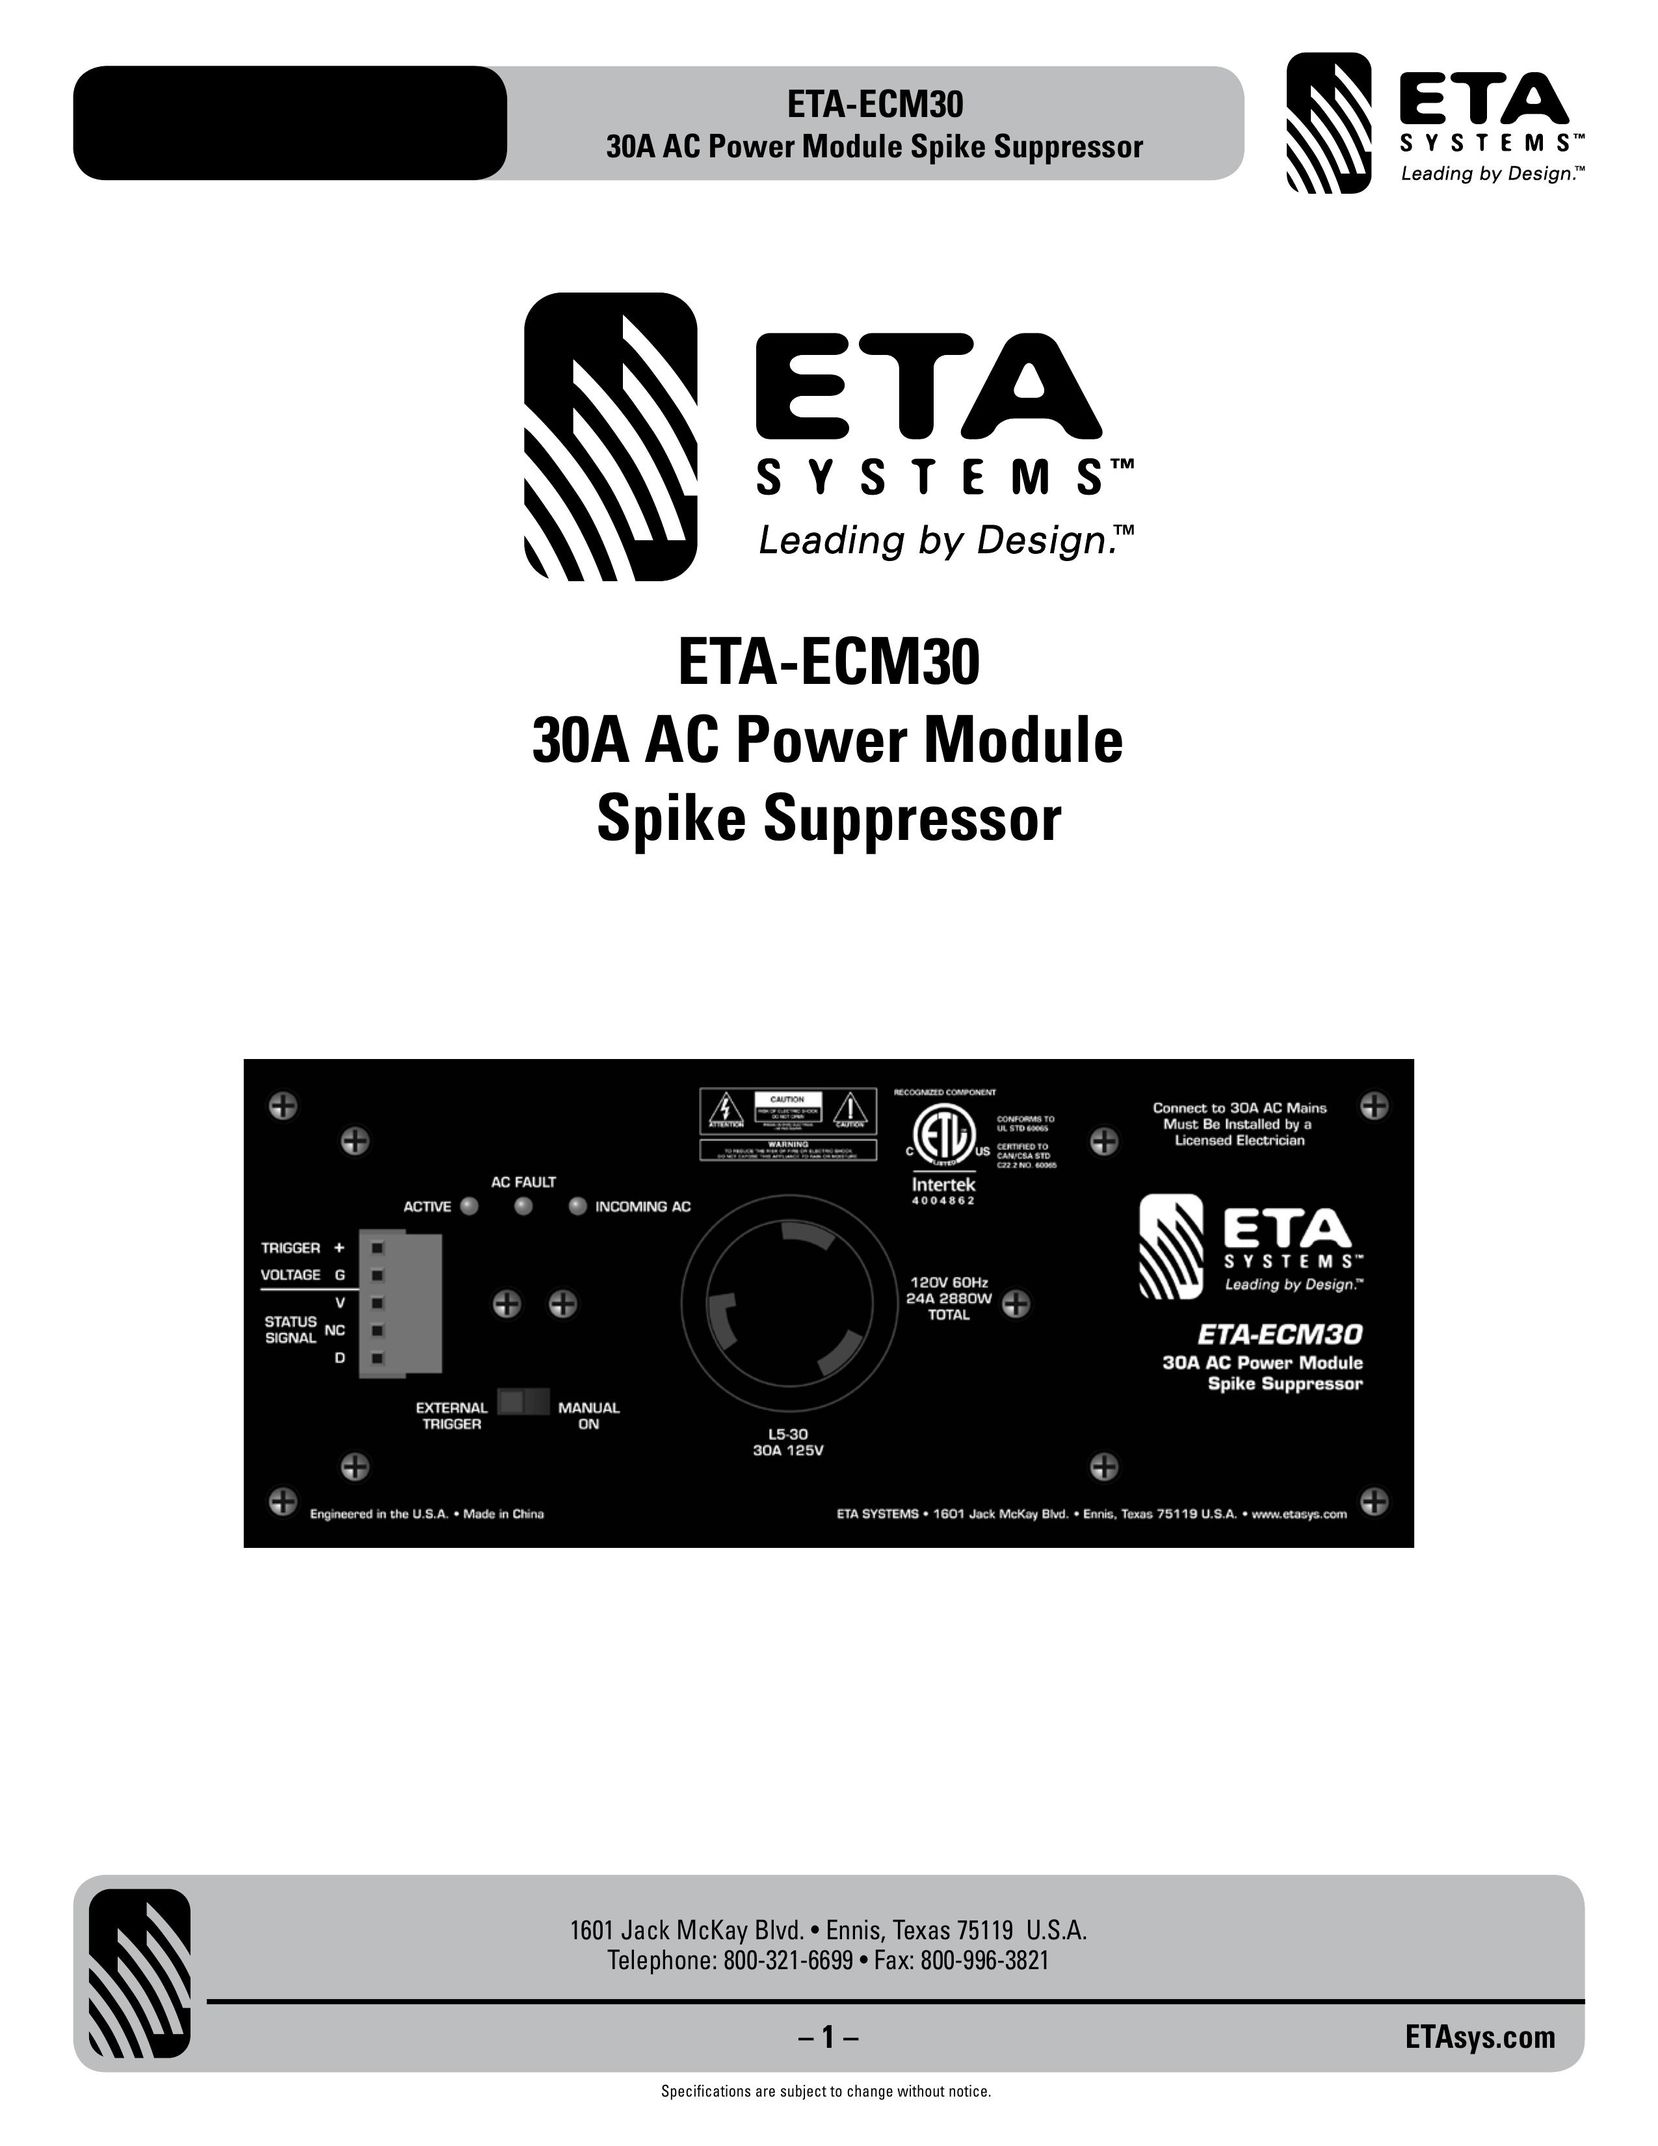 ETA Systems ETA-ECM30 Surge Protector User Manual